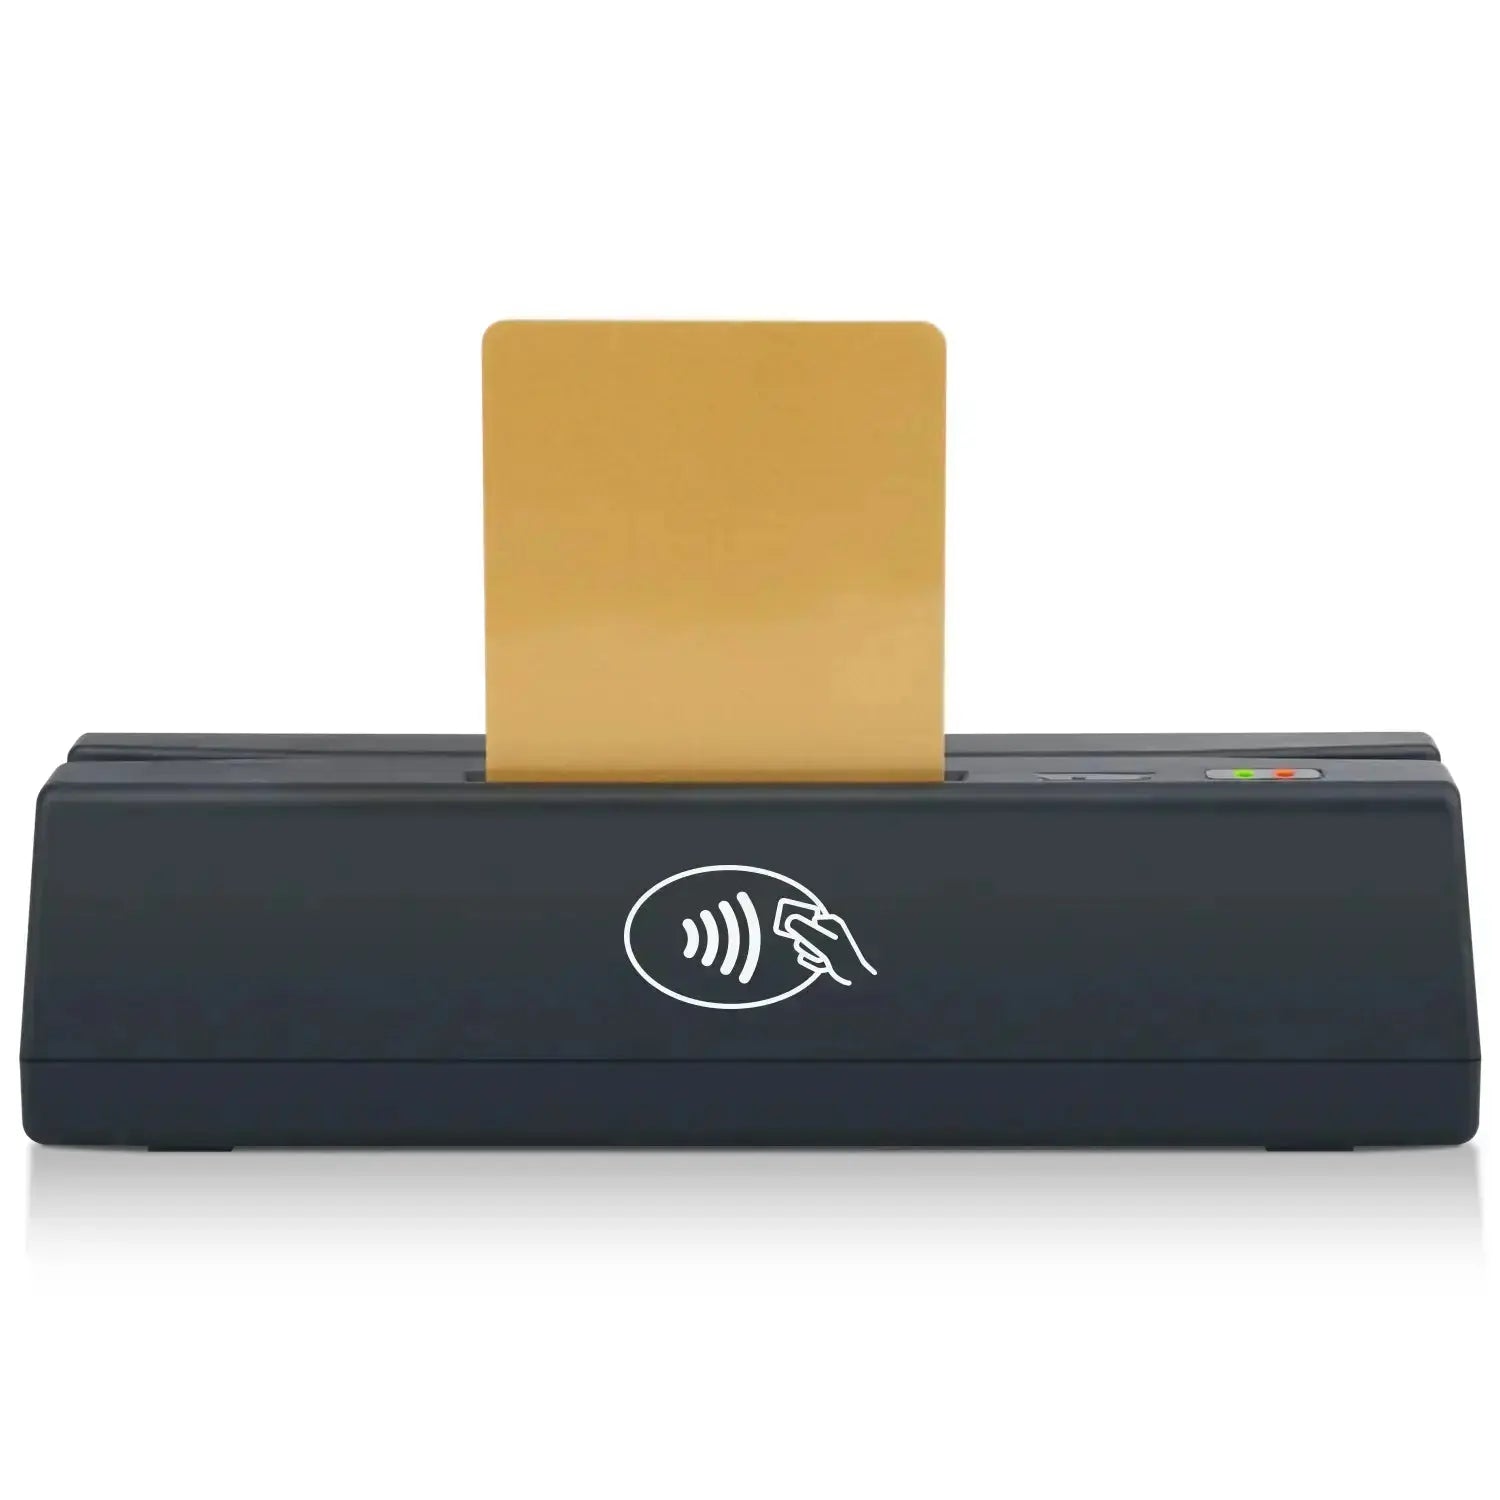 MSR160 4-in-1 RFID + Chip + Credit Card Reader Writer Tagtix RFID